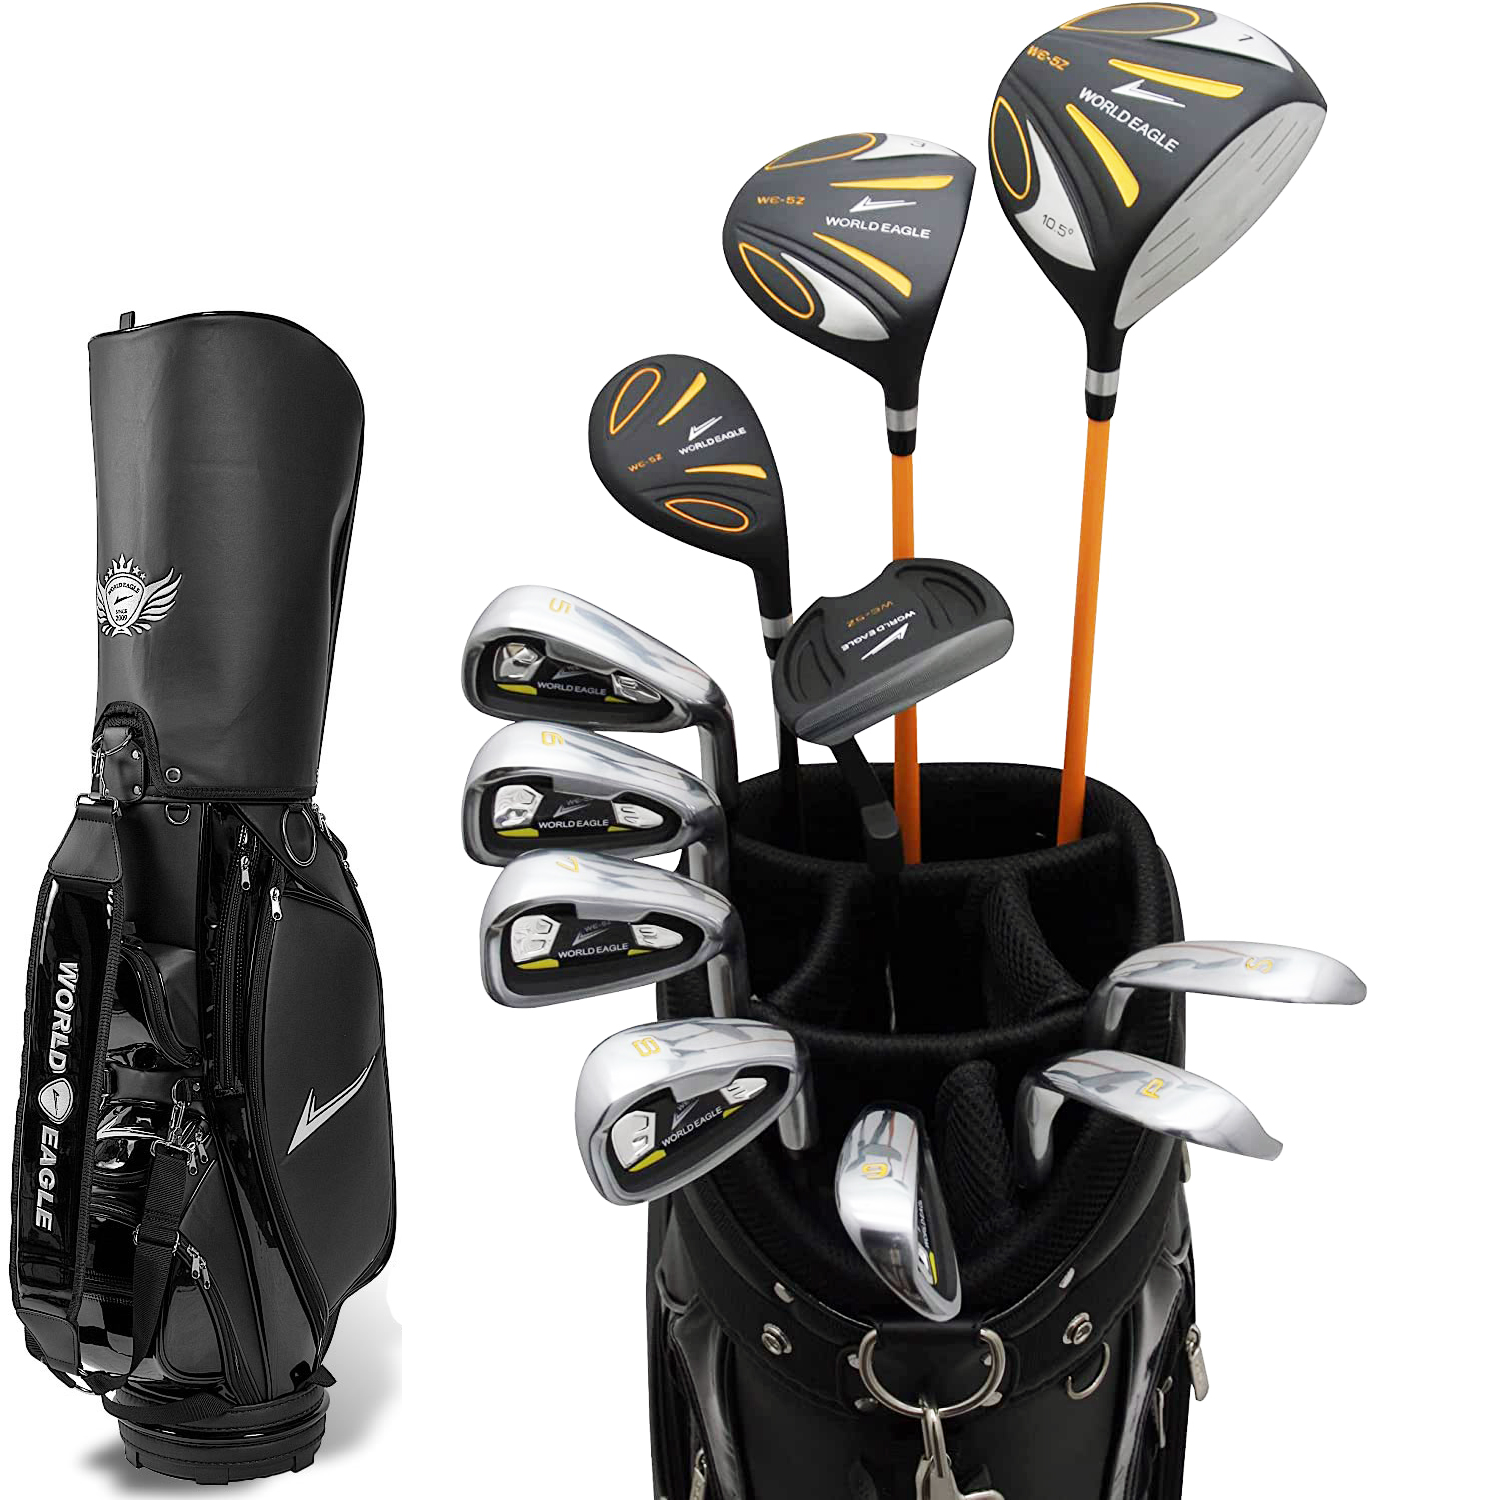 WE-5Z-BLACK CBXカートバック 14点ゴルフクラブセット 右利き用 選べるバッグ ゴルフ用品 ワールドイーグル : 33746-33789  : ワールドゴルフ - 通販 - Yahoo!ショッピング